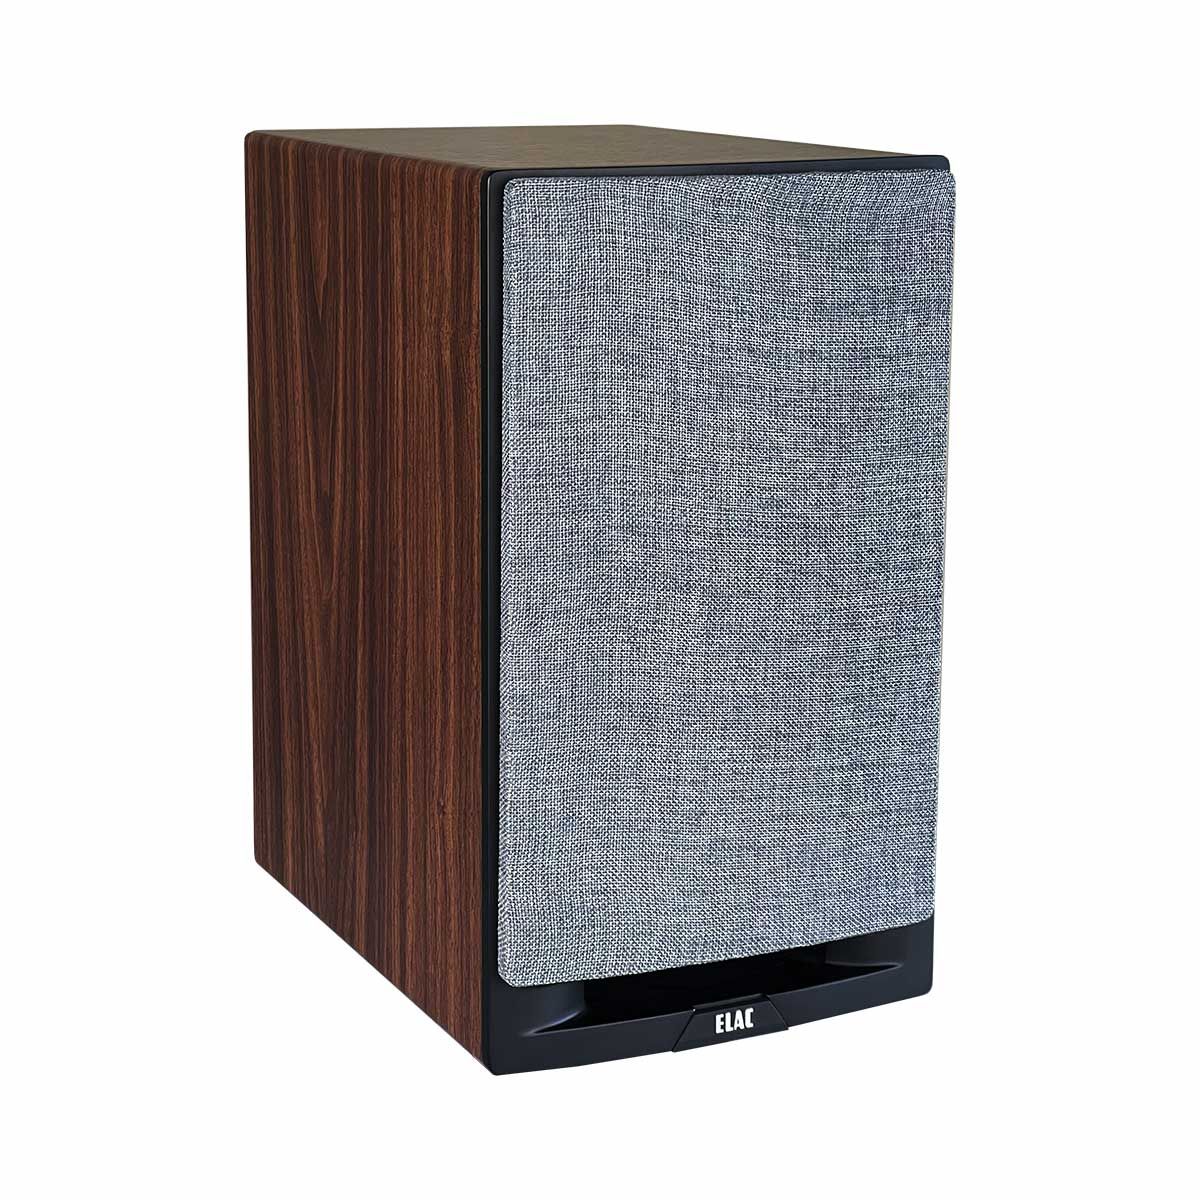 ELAC Uni-Fi Reference UBR62 3-Way Bookshelf Speaker - Black front angle w/ grill